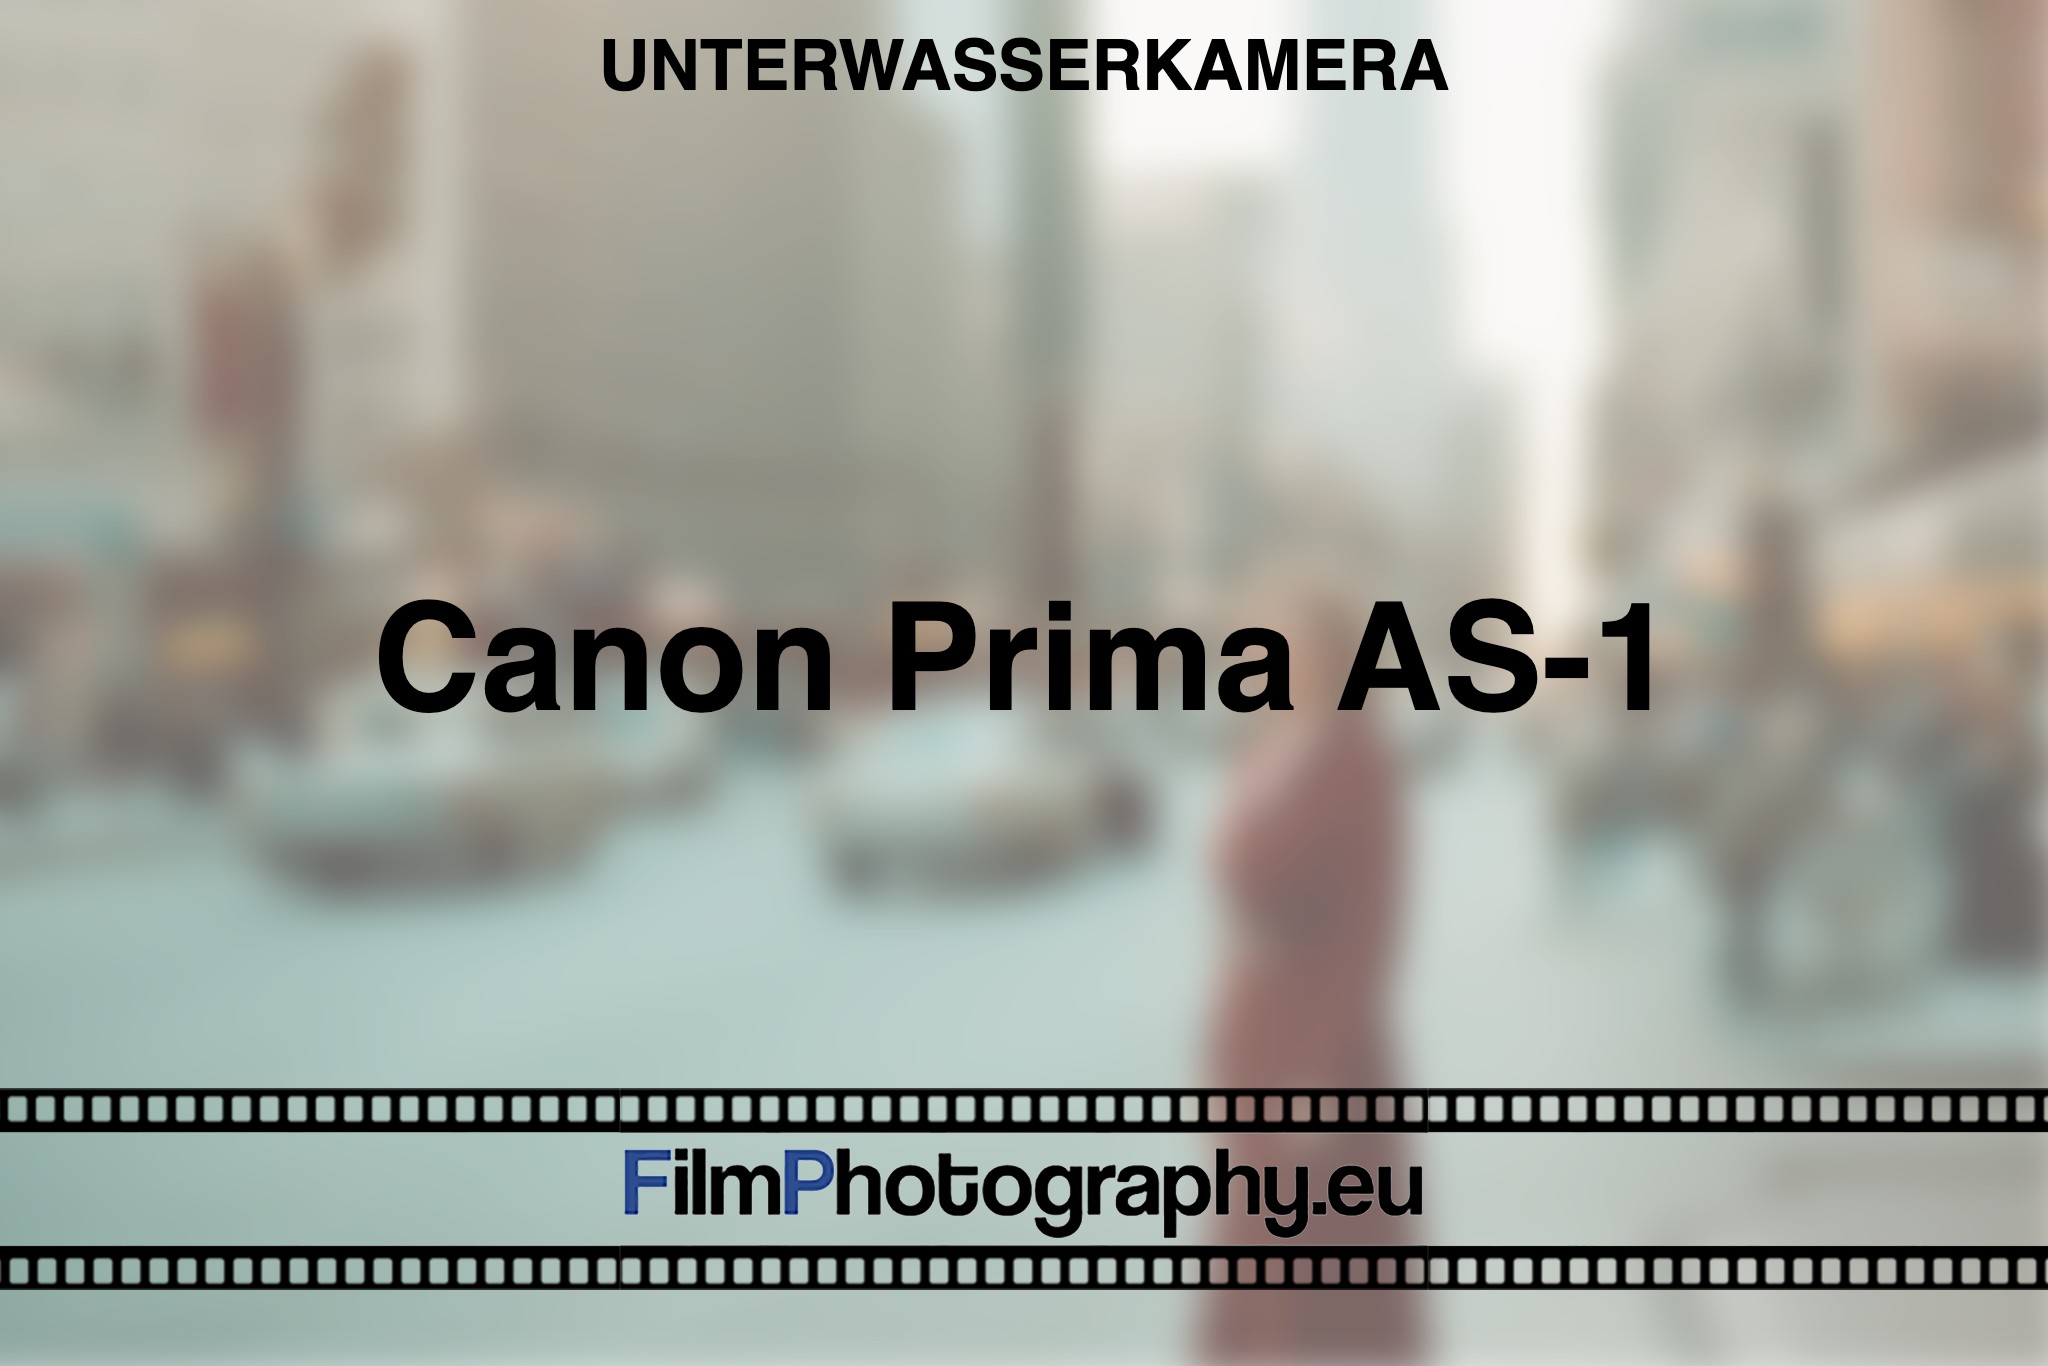 canon-prima-as-1-unterwasserkamera-bnv